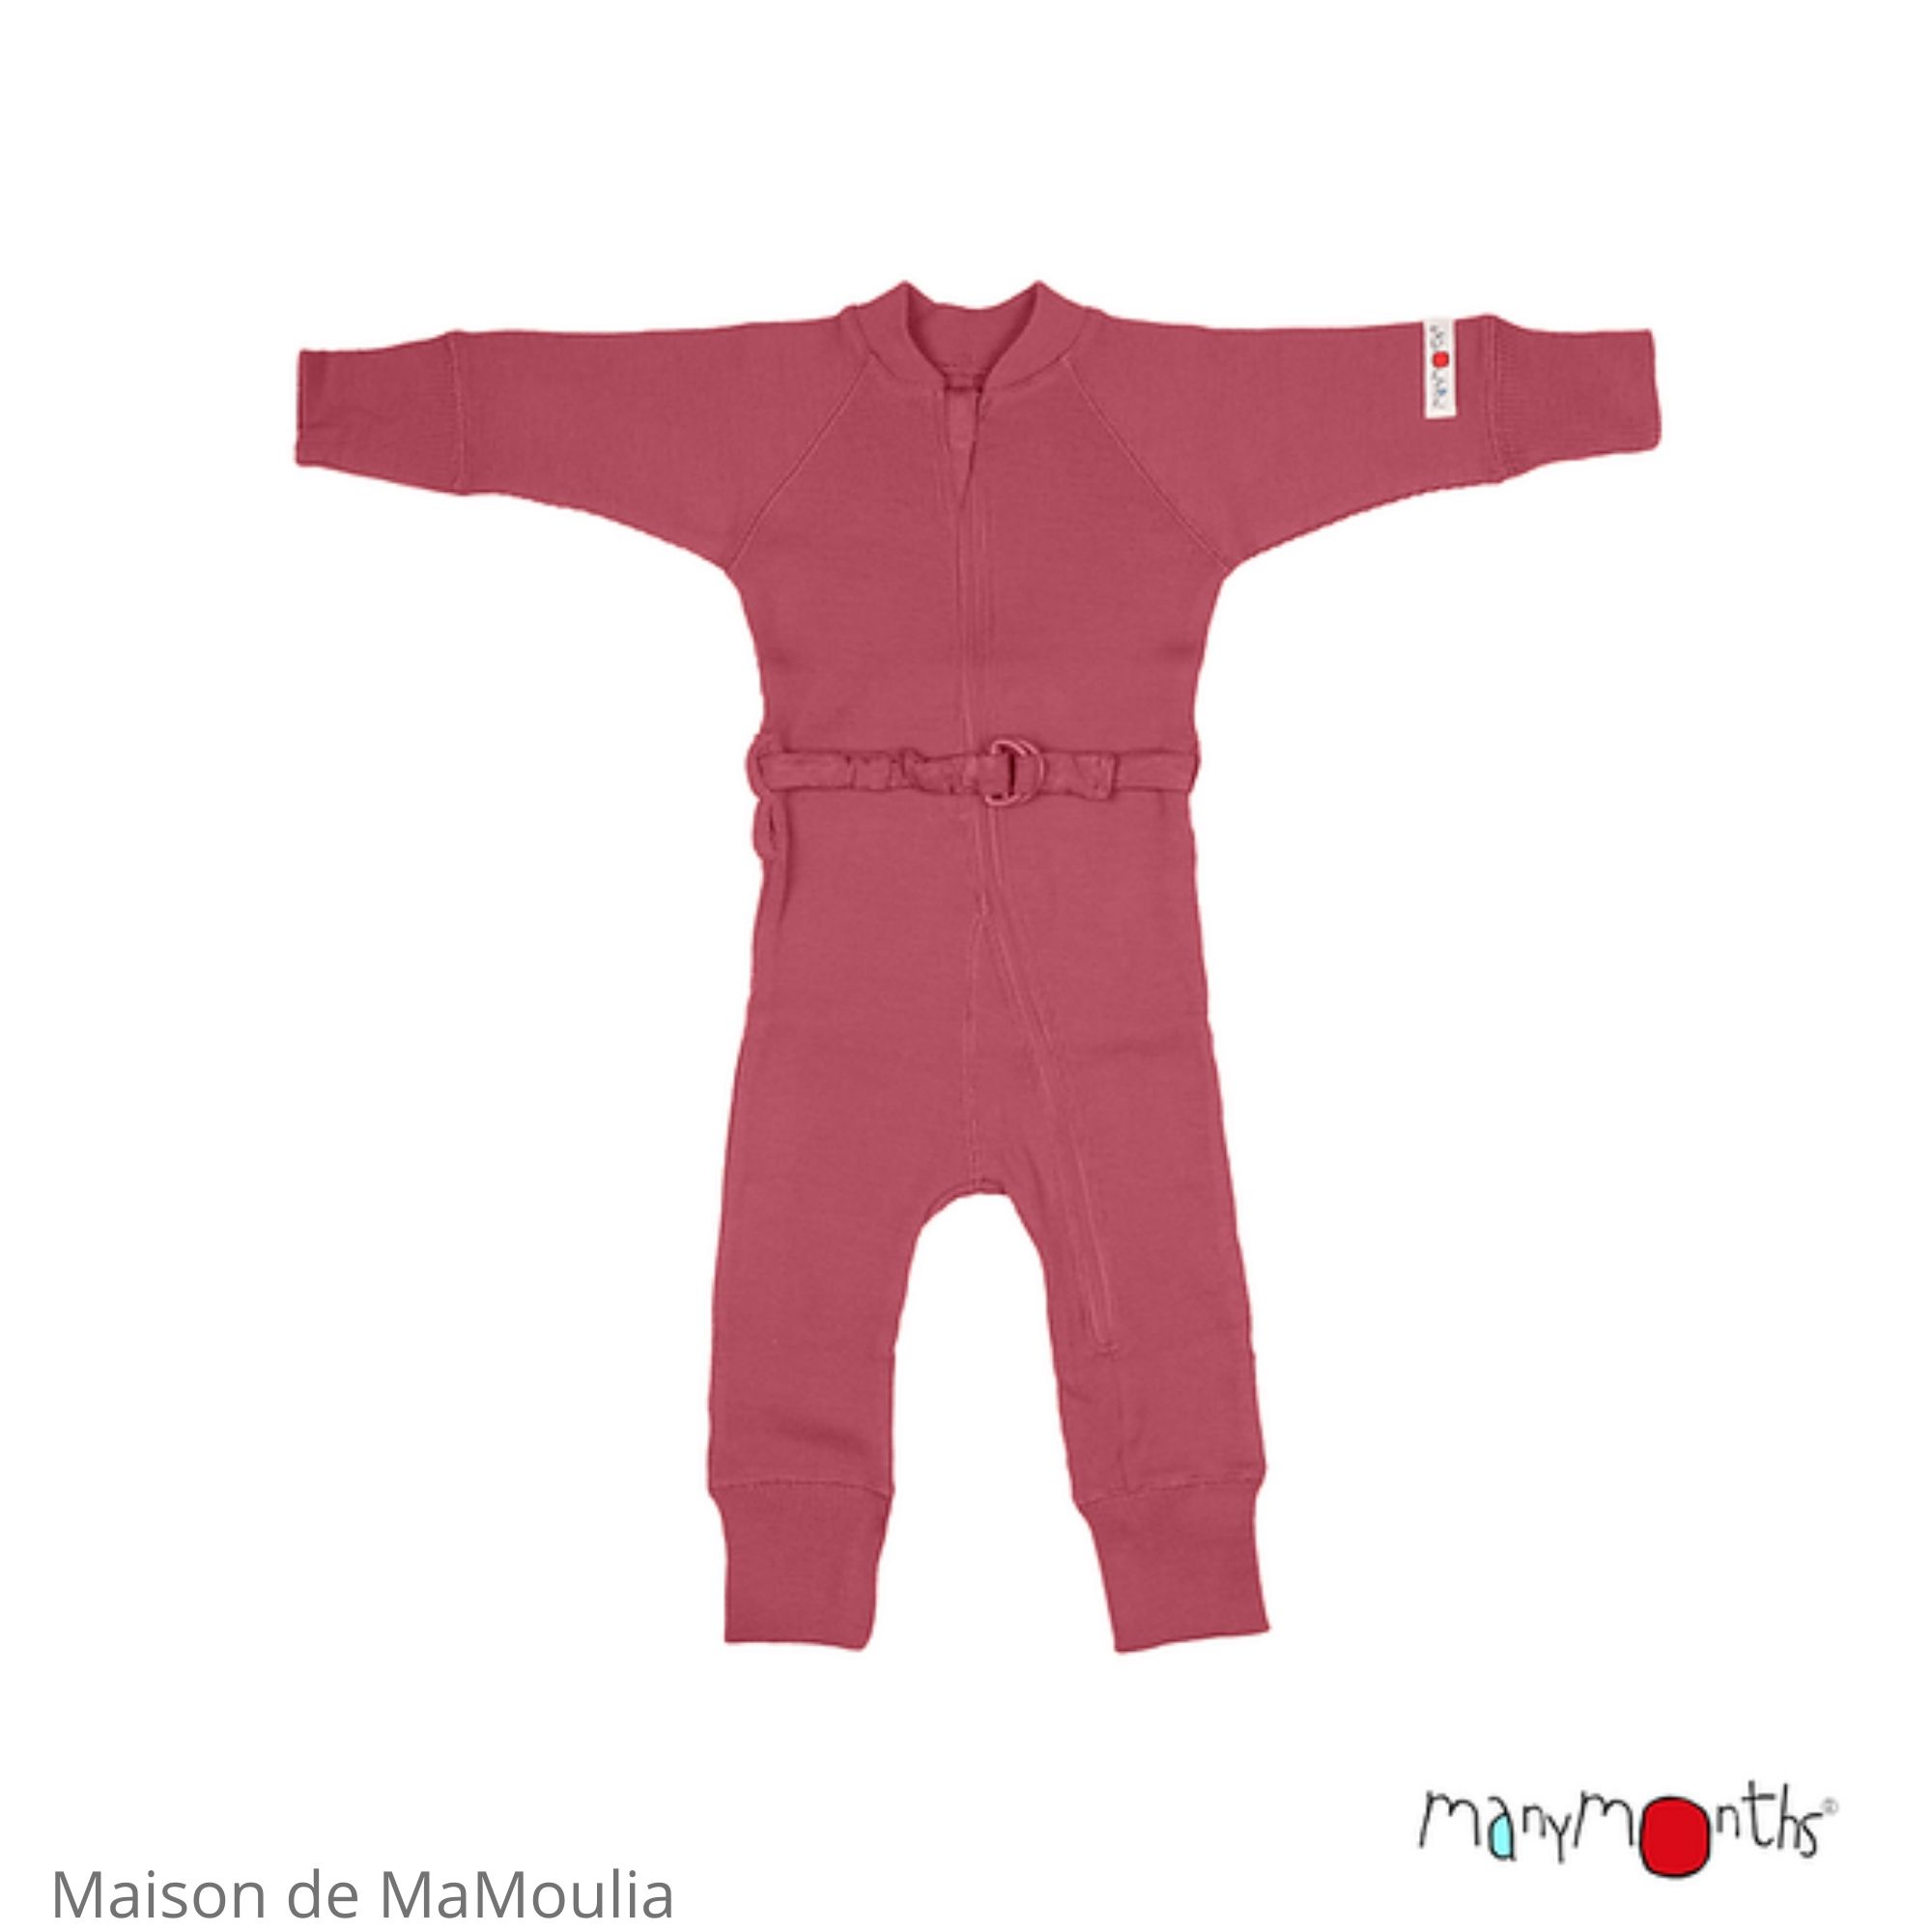 combinaison-bebe-enfant-evolutive-pure-laine-merinos-manymonths-maison-de-mamoulia-earth-red-rose